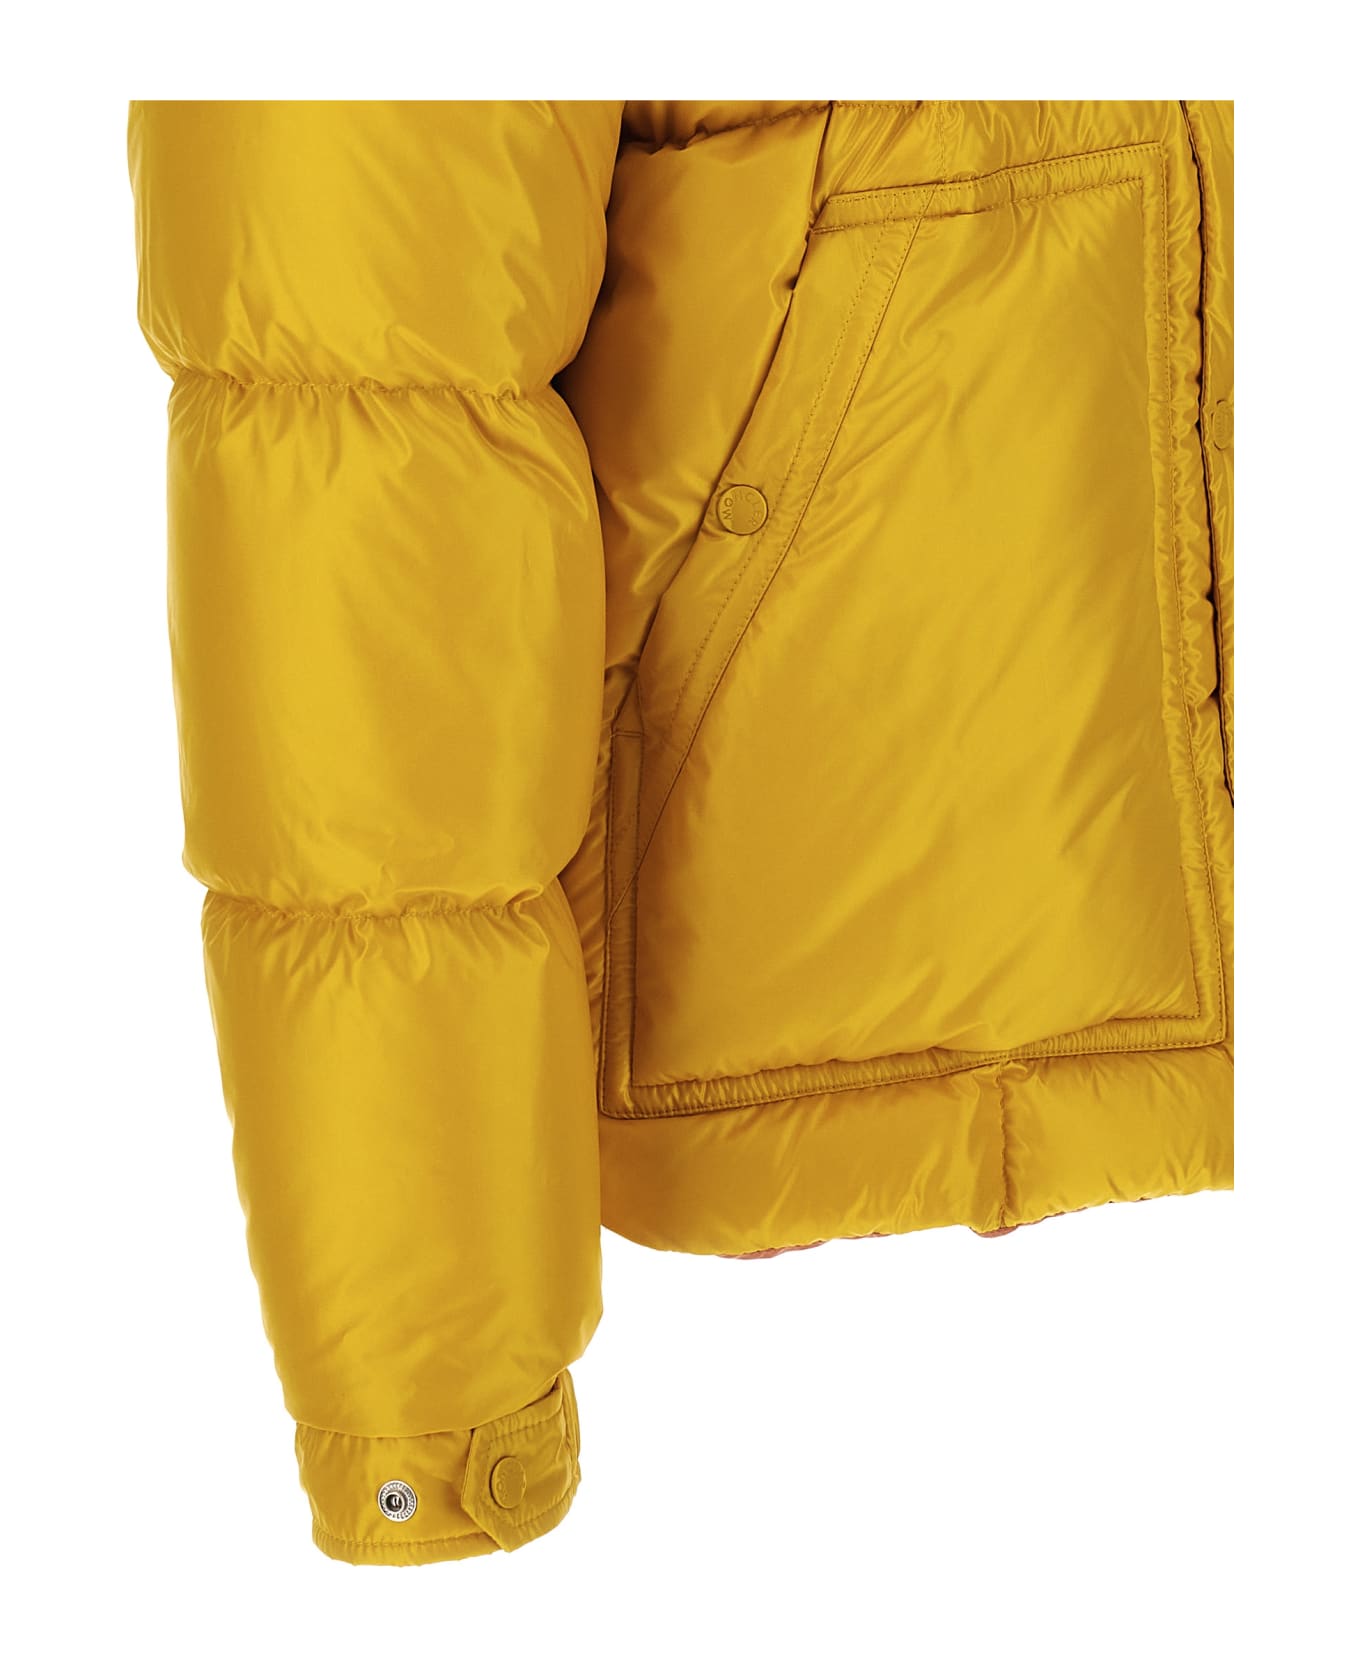 Moncler 'ain' Down Jacket - Yellow & Orange ダウンジャケット